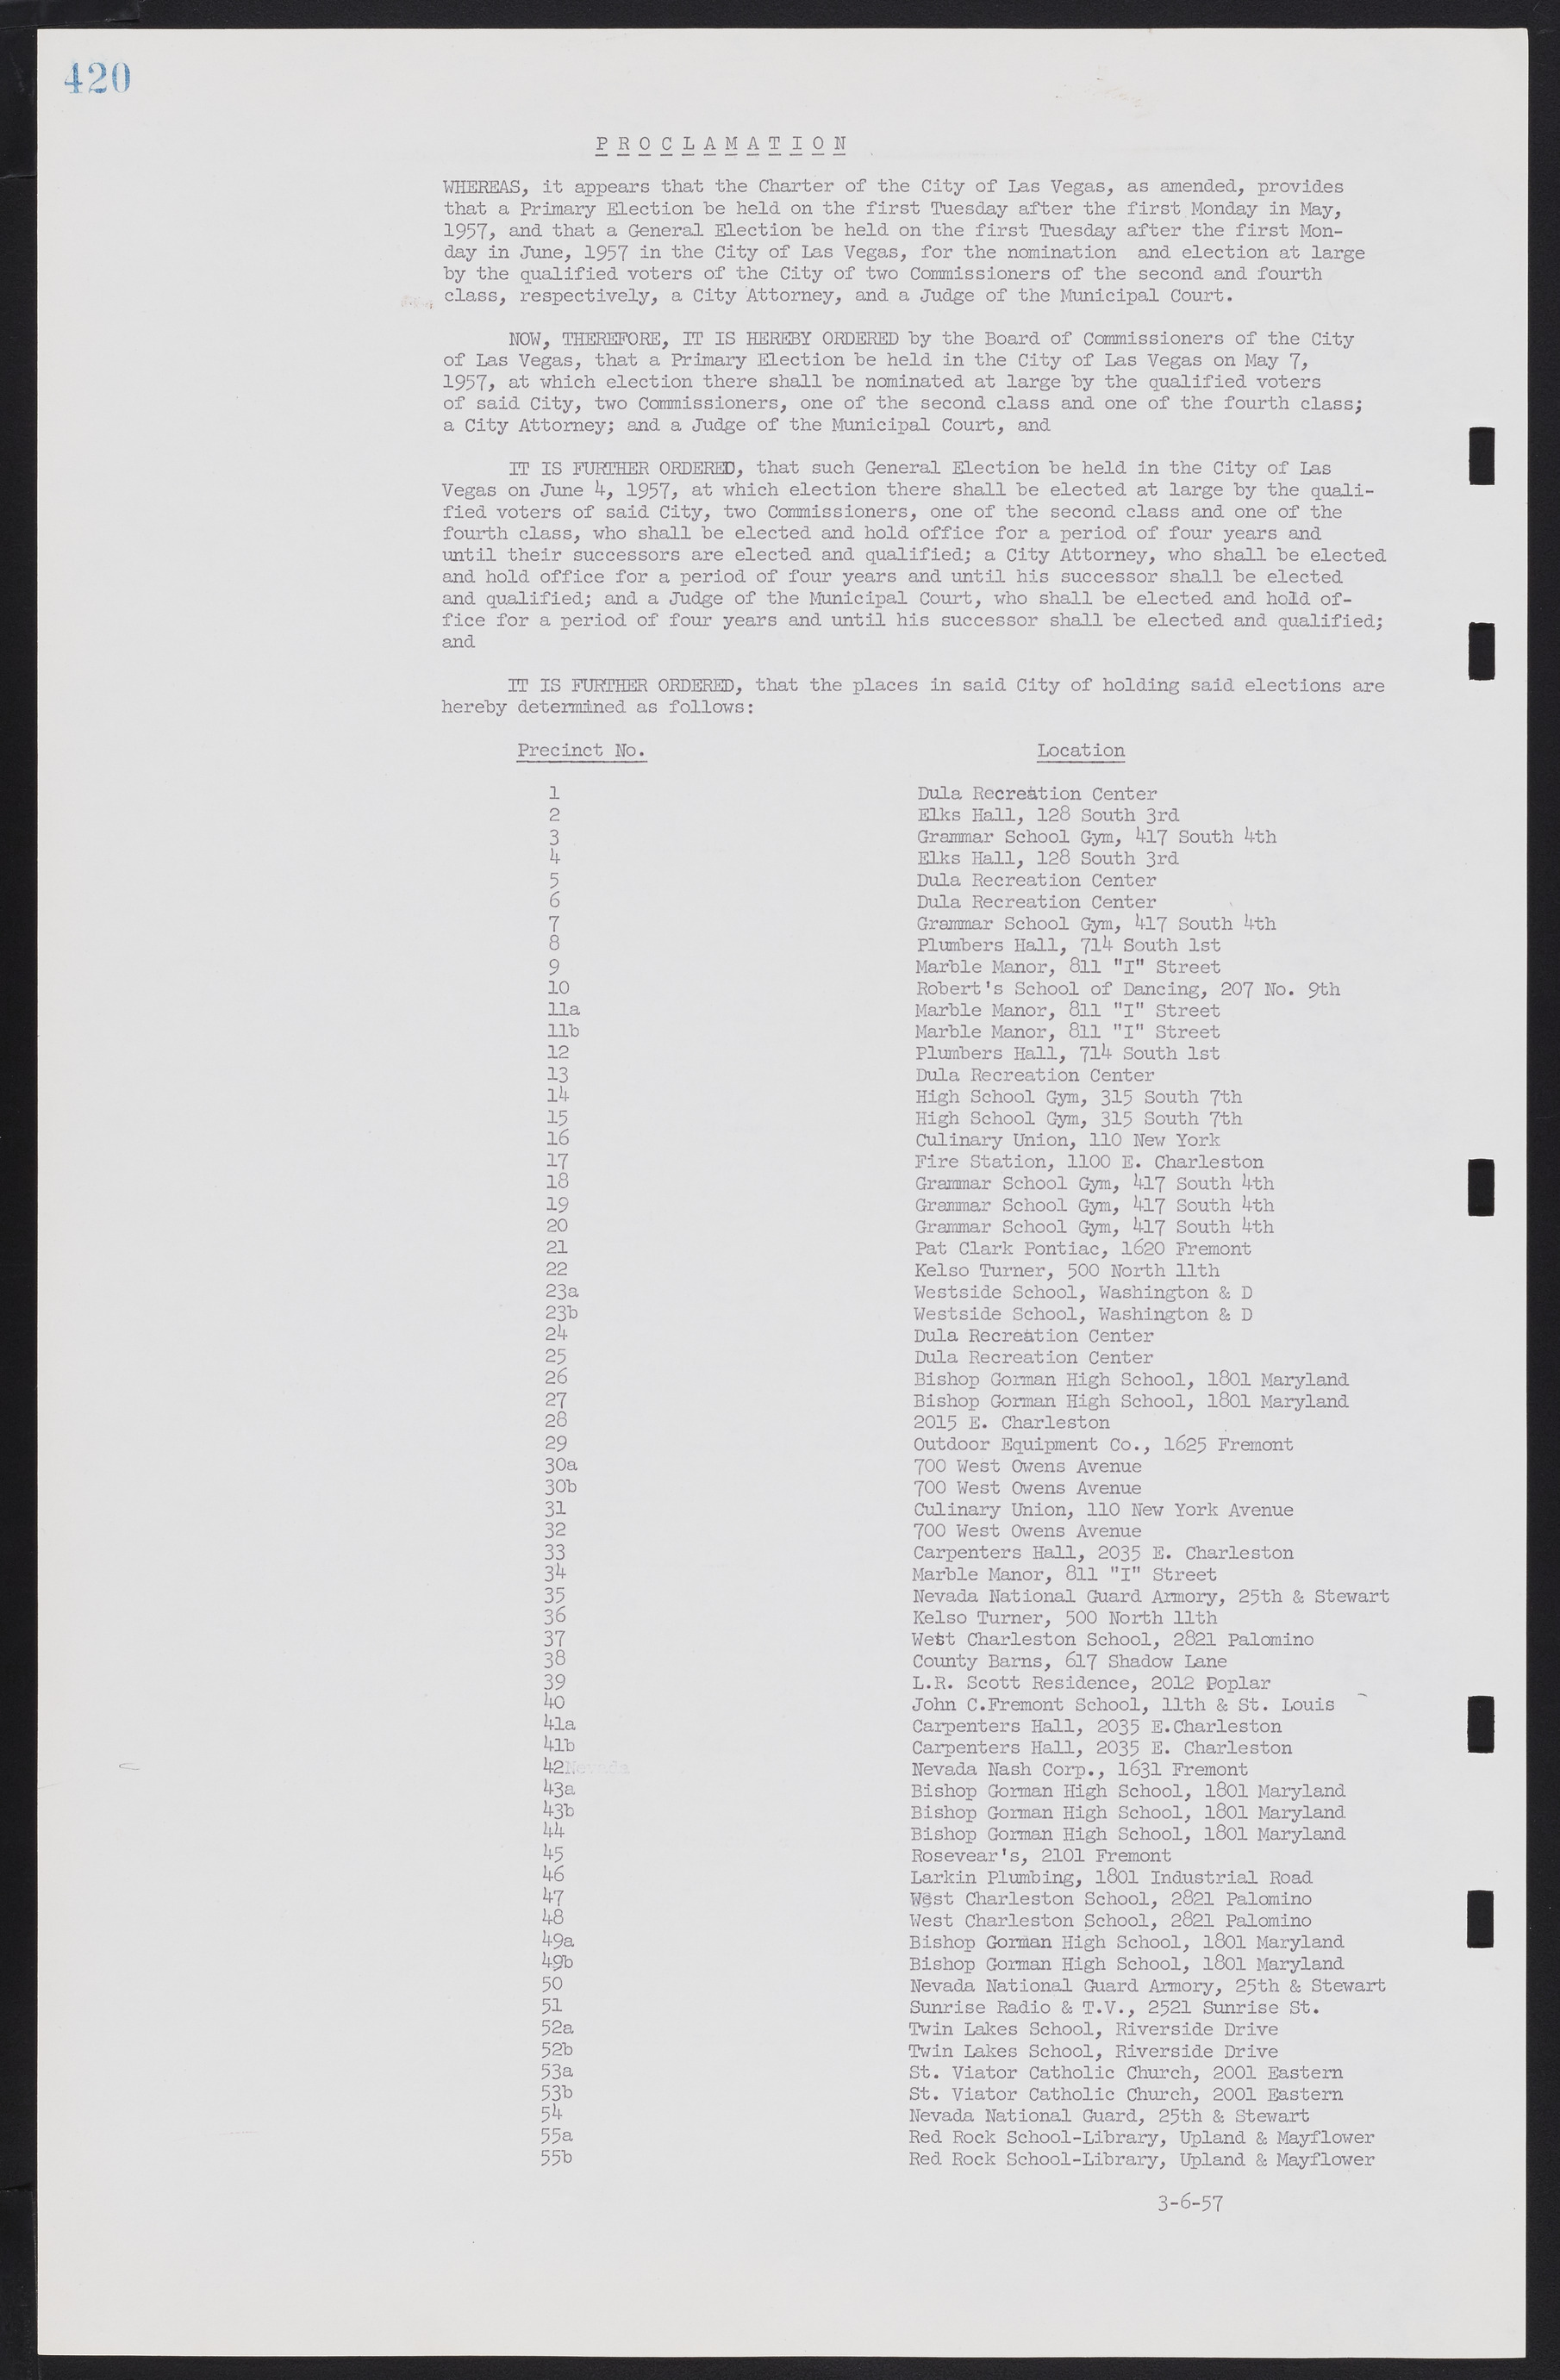 Las Vegas City Commission Minutes, September 21, 1955 to November 20, 1957, lvc000010-440